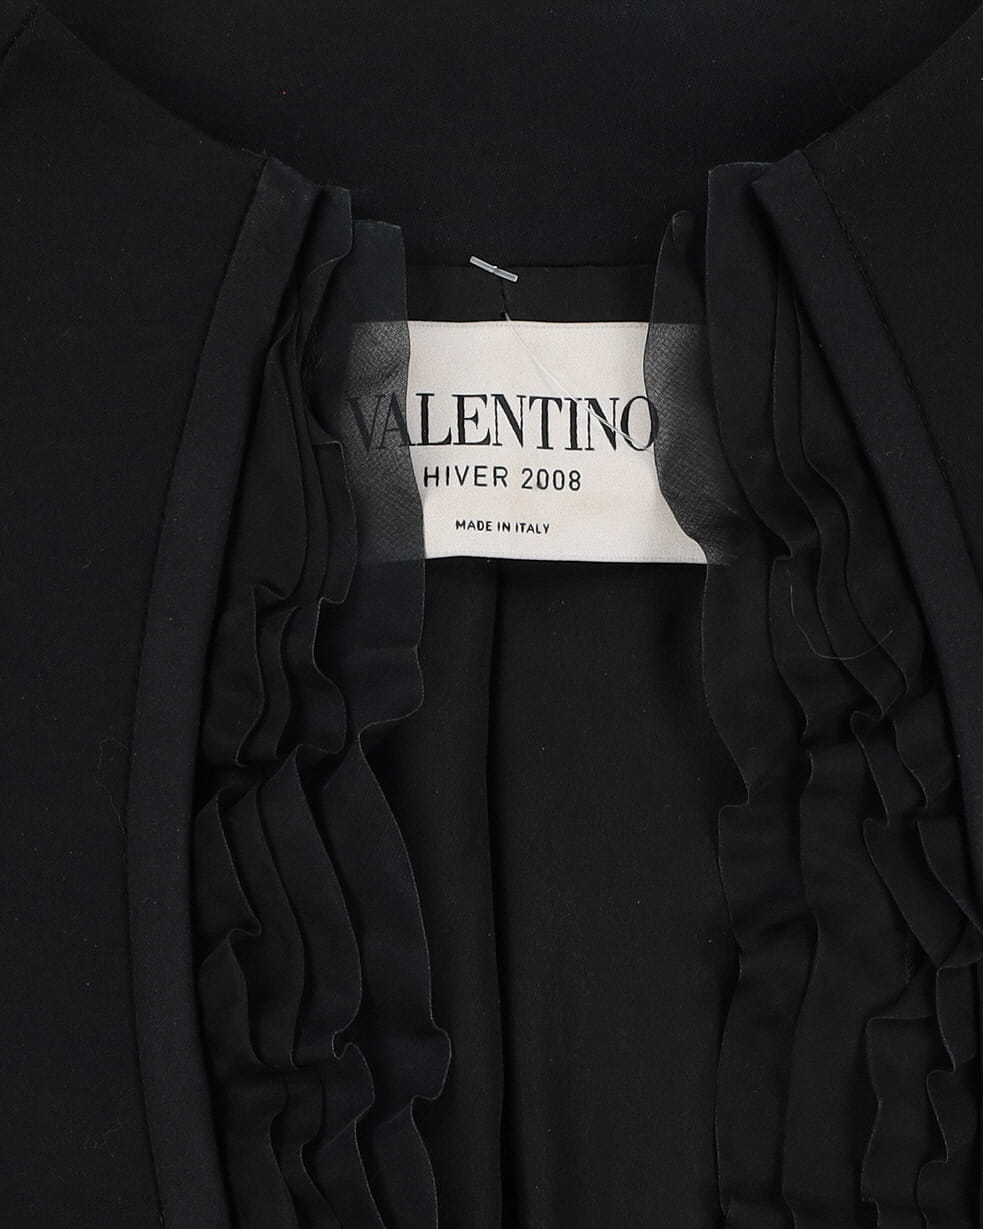 Valentino Hiver 2008 Black Evening Blazer Jacket - S